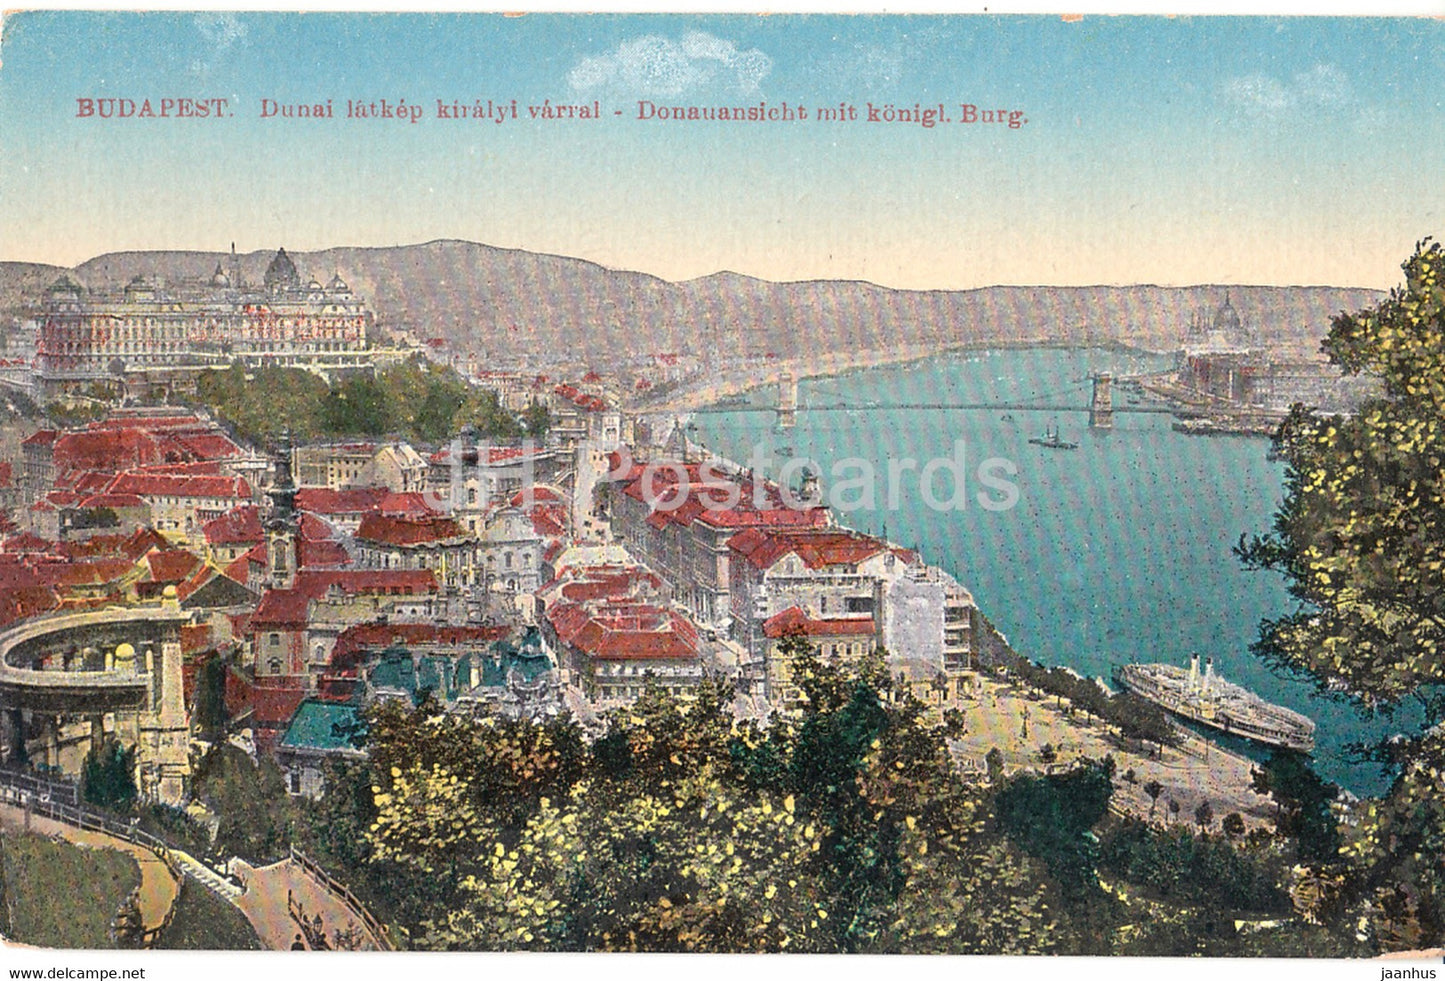 Budapest - Dunai Latkep kiralyi varral - Donauansicht mit konigl Burg - old postcard - Hungary - used - JH Postcards